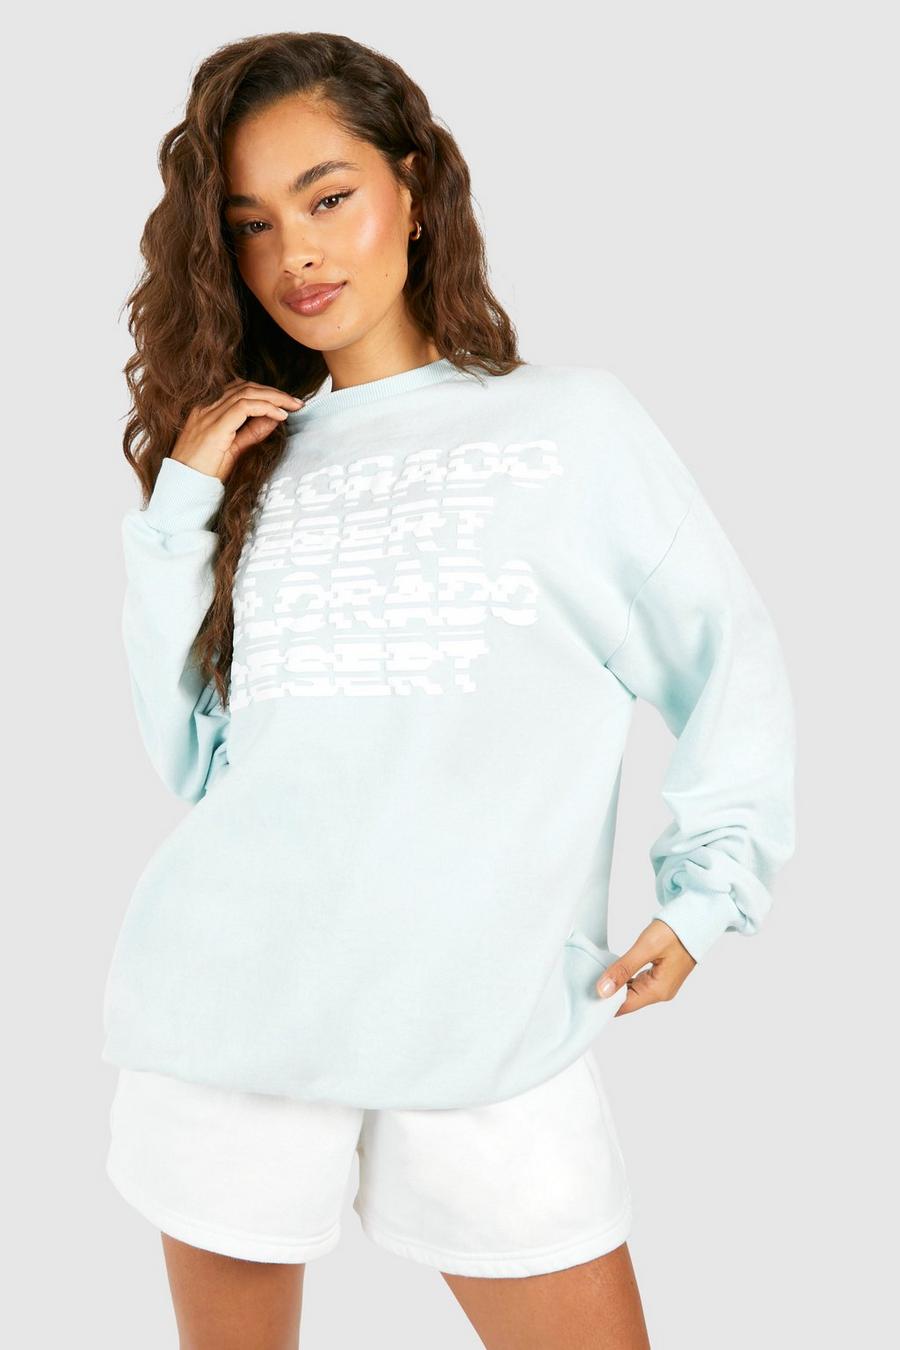 Baby blue Colorado Puff Print sleeves Oversized Sweatshirt